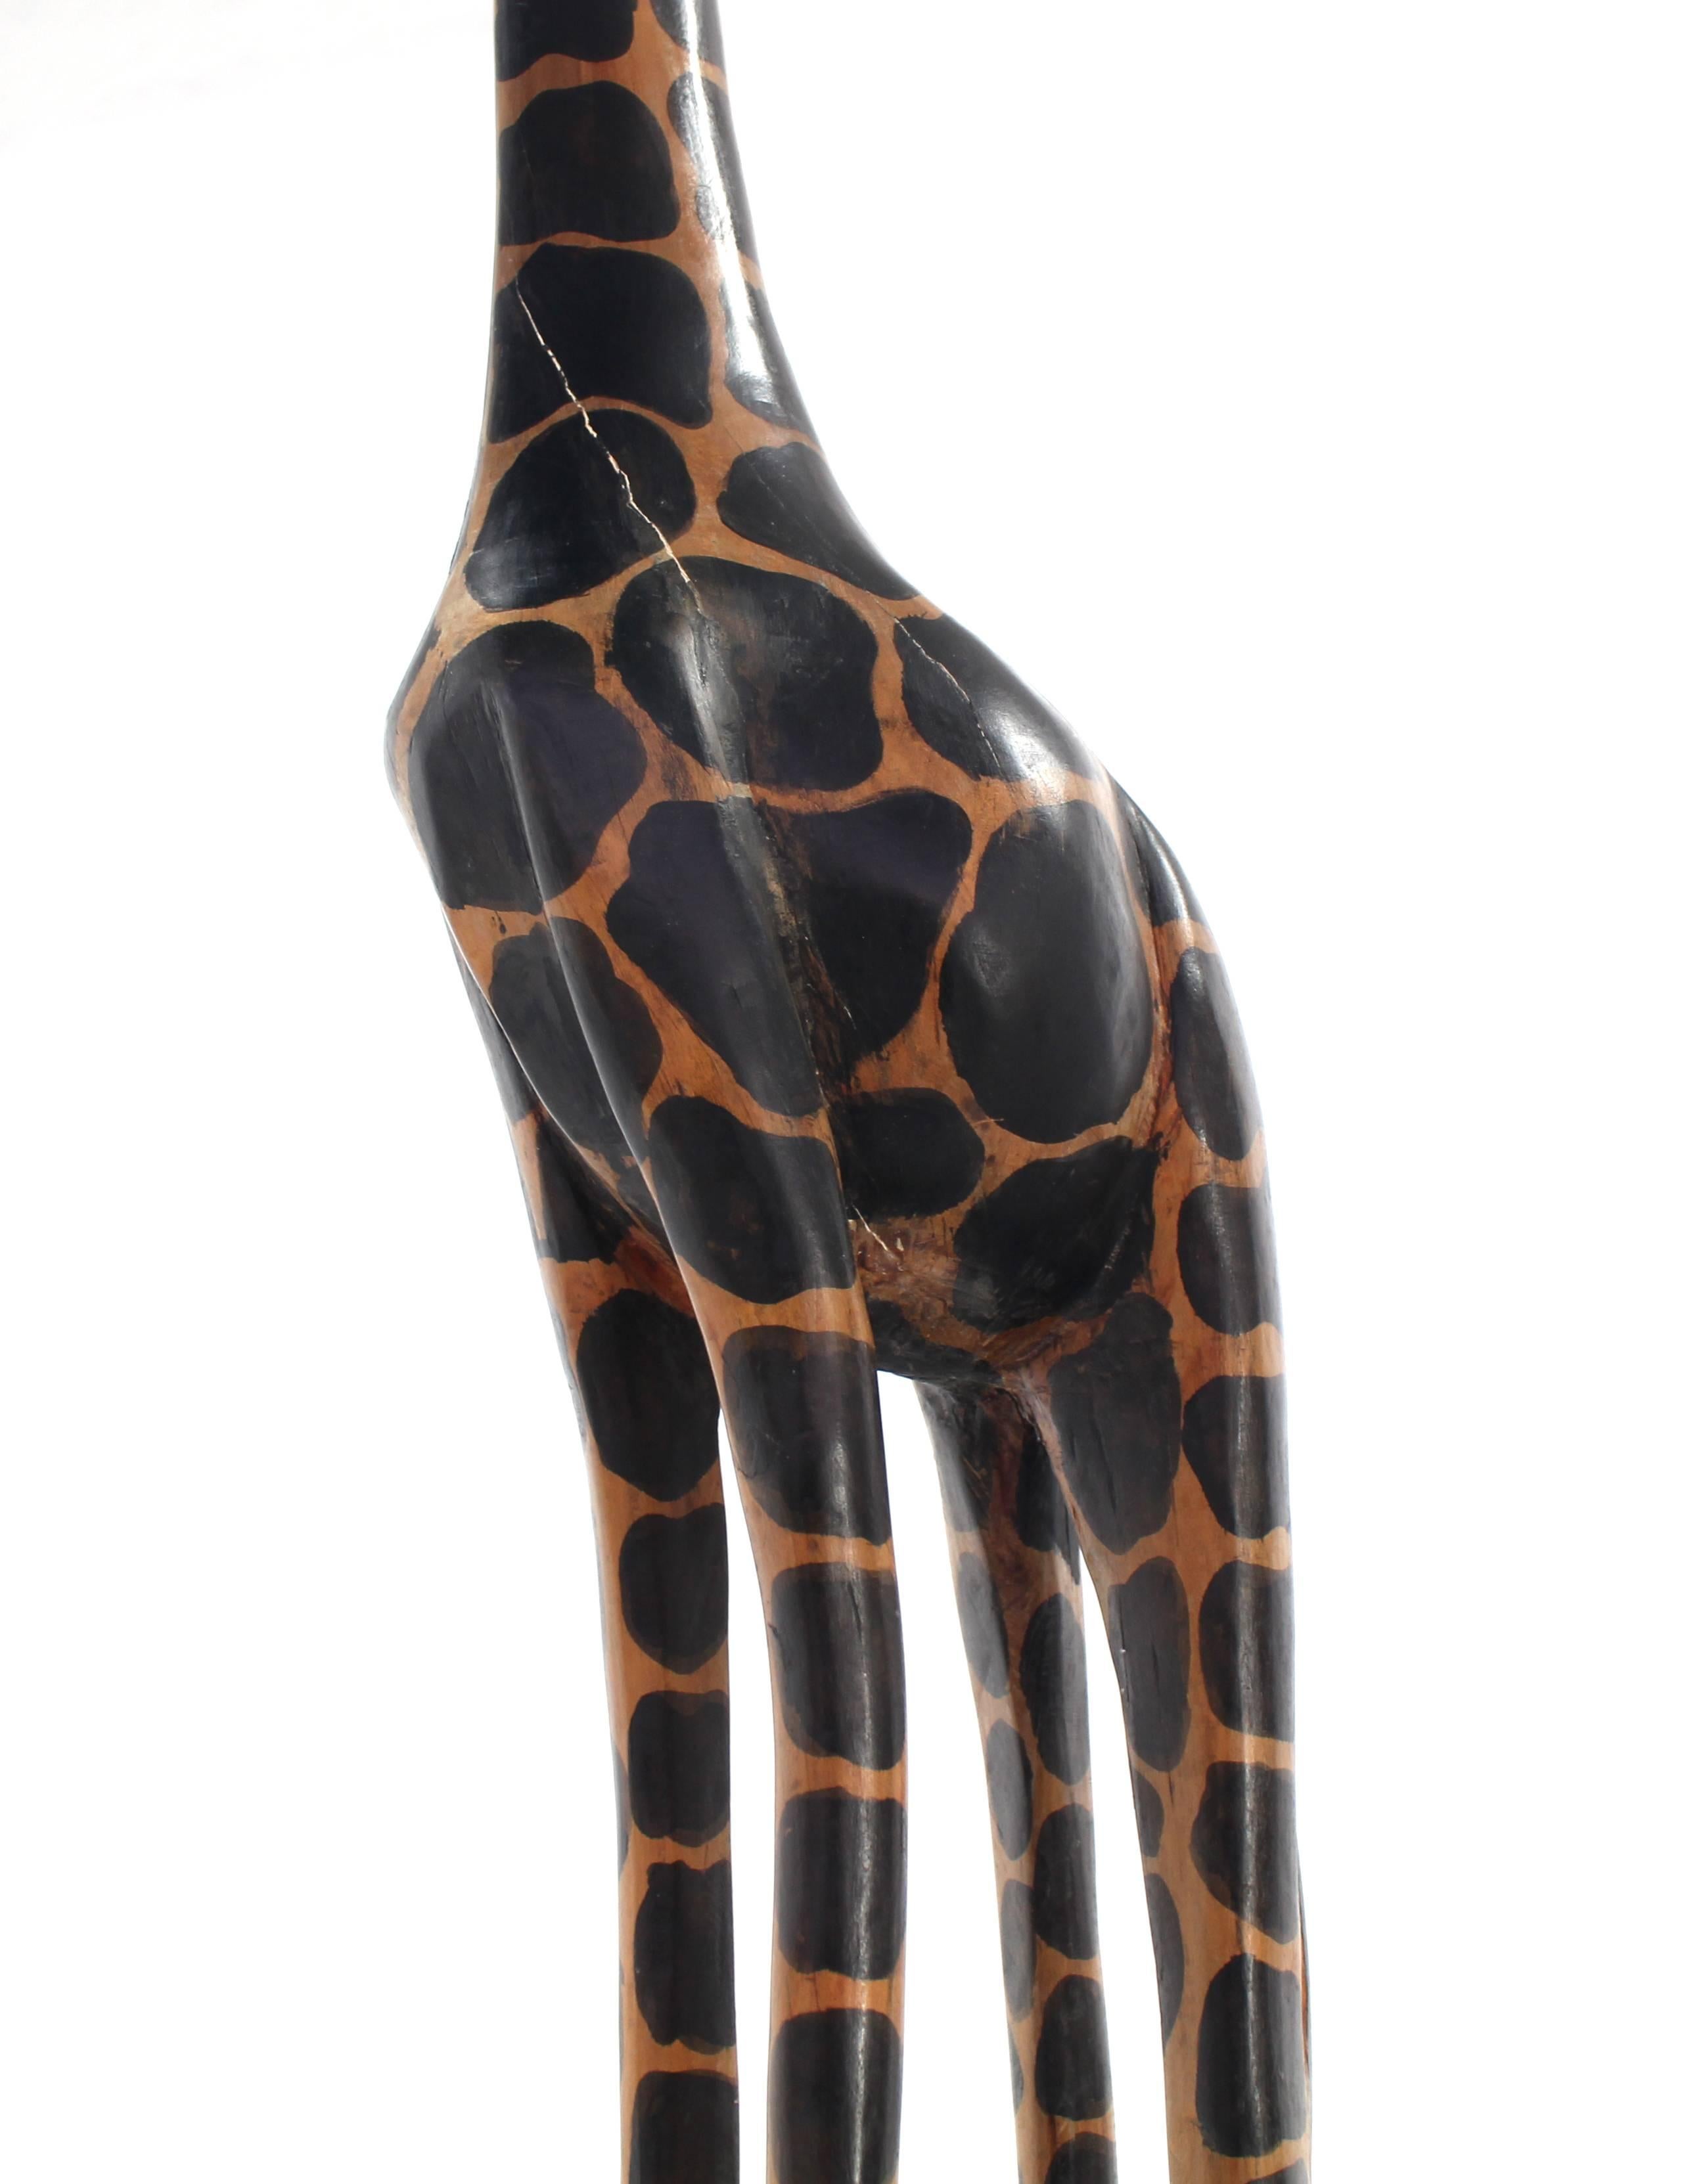 10 foot tall giraffe